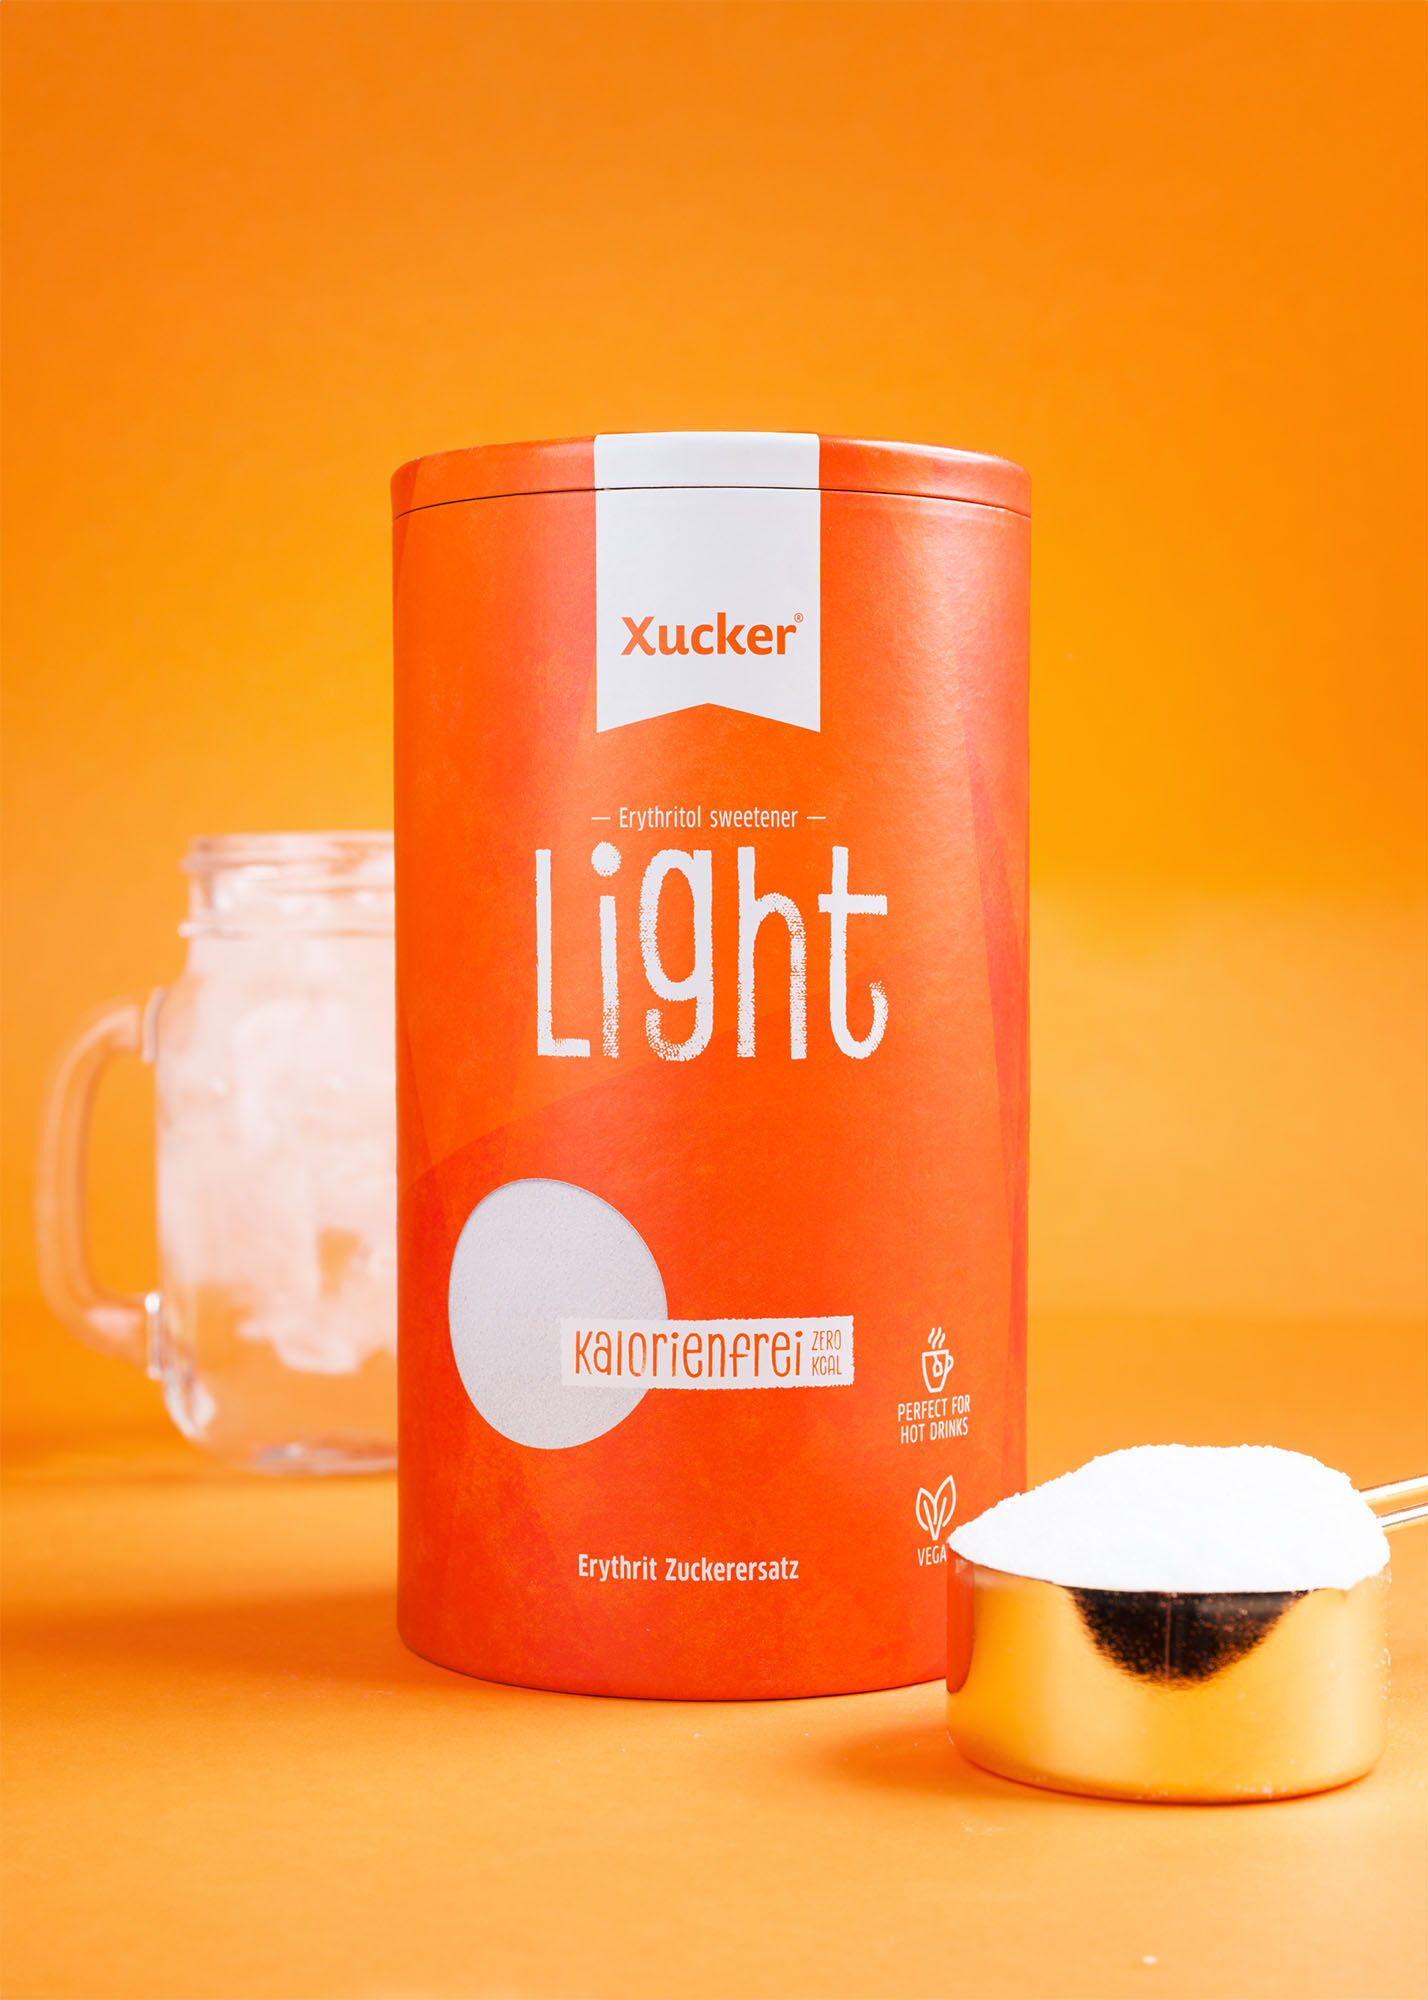 Xucker Light Dose (Erythrit) von Xucker